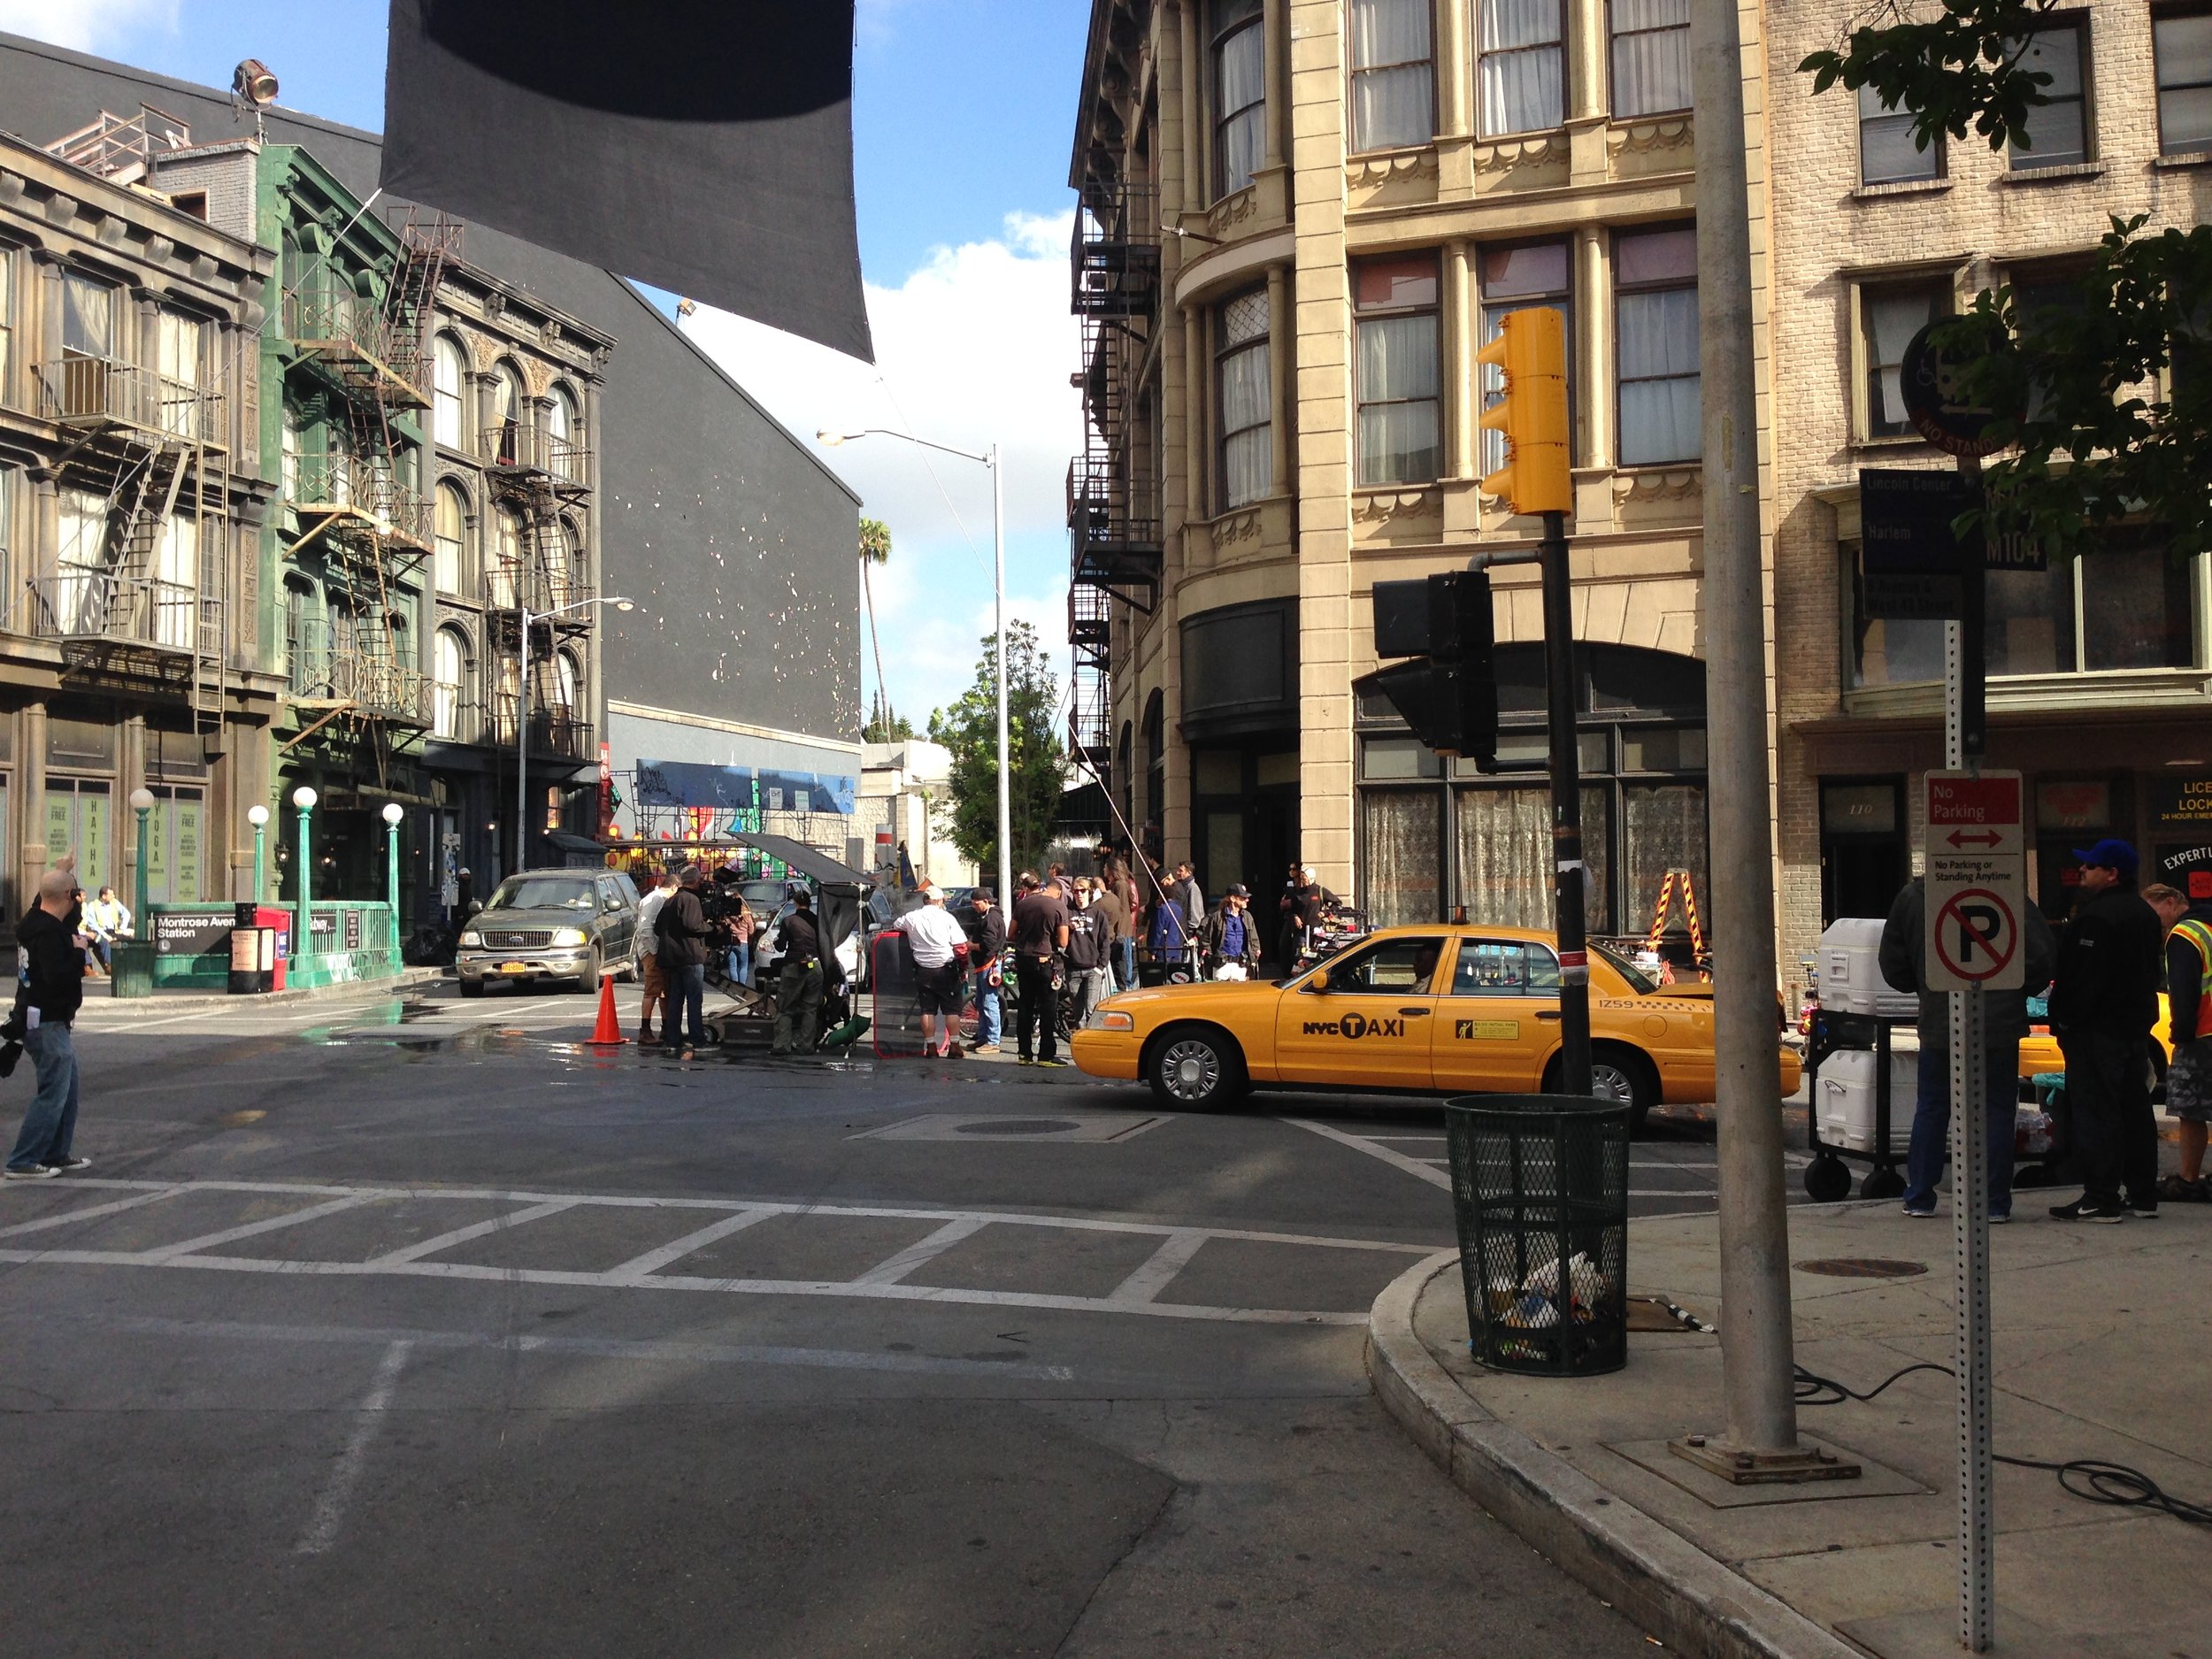 GLEE CREW FILMING ON THE PARAMOUNT STUDIOS’ NEW YORK STREET